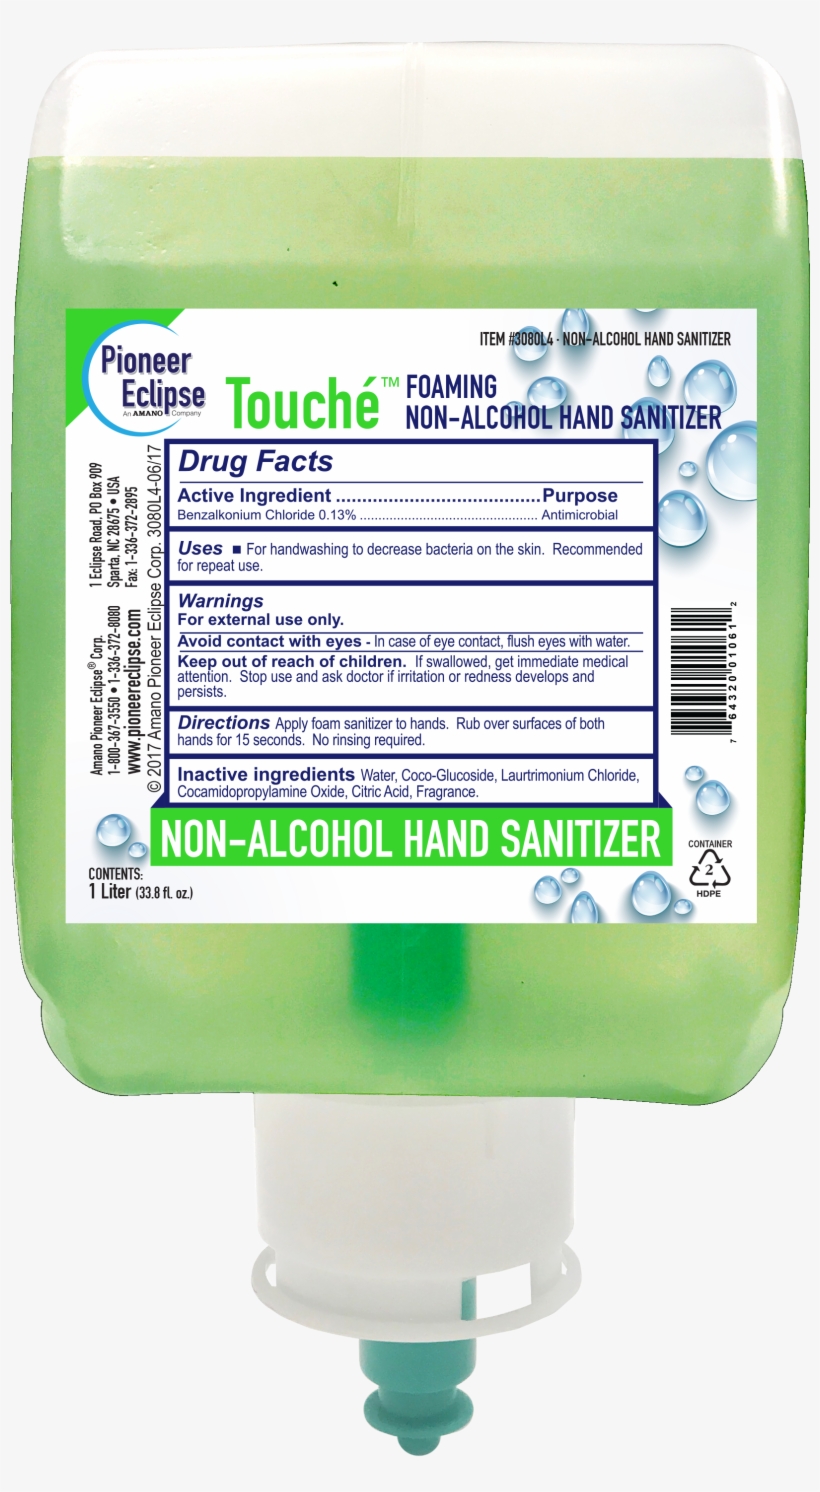 Touché Foaming Hand Non Alcohol Hand Sanitizer High - Gas, transparent png #1643597